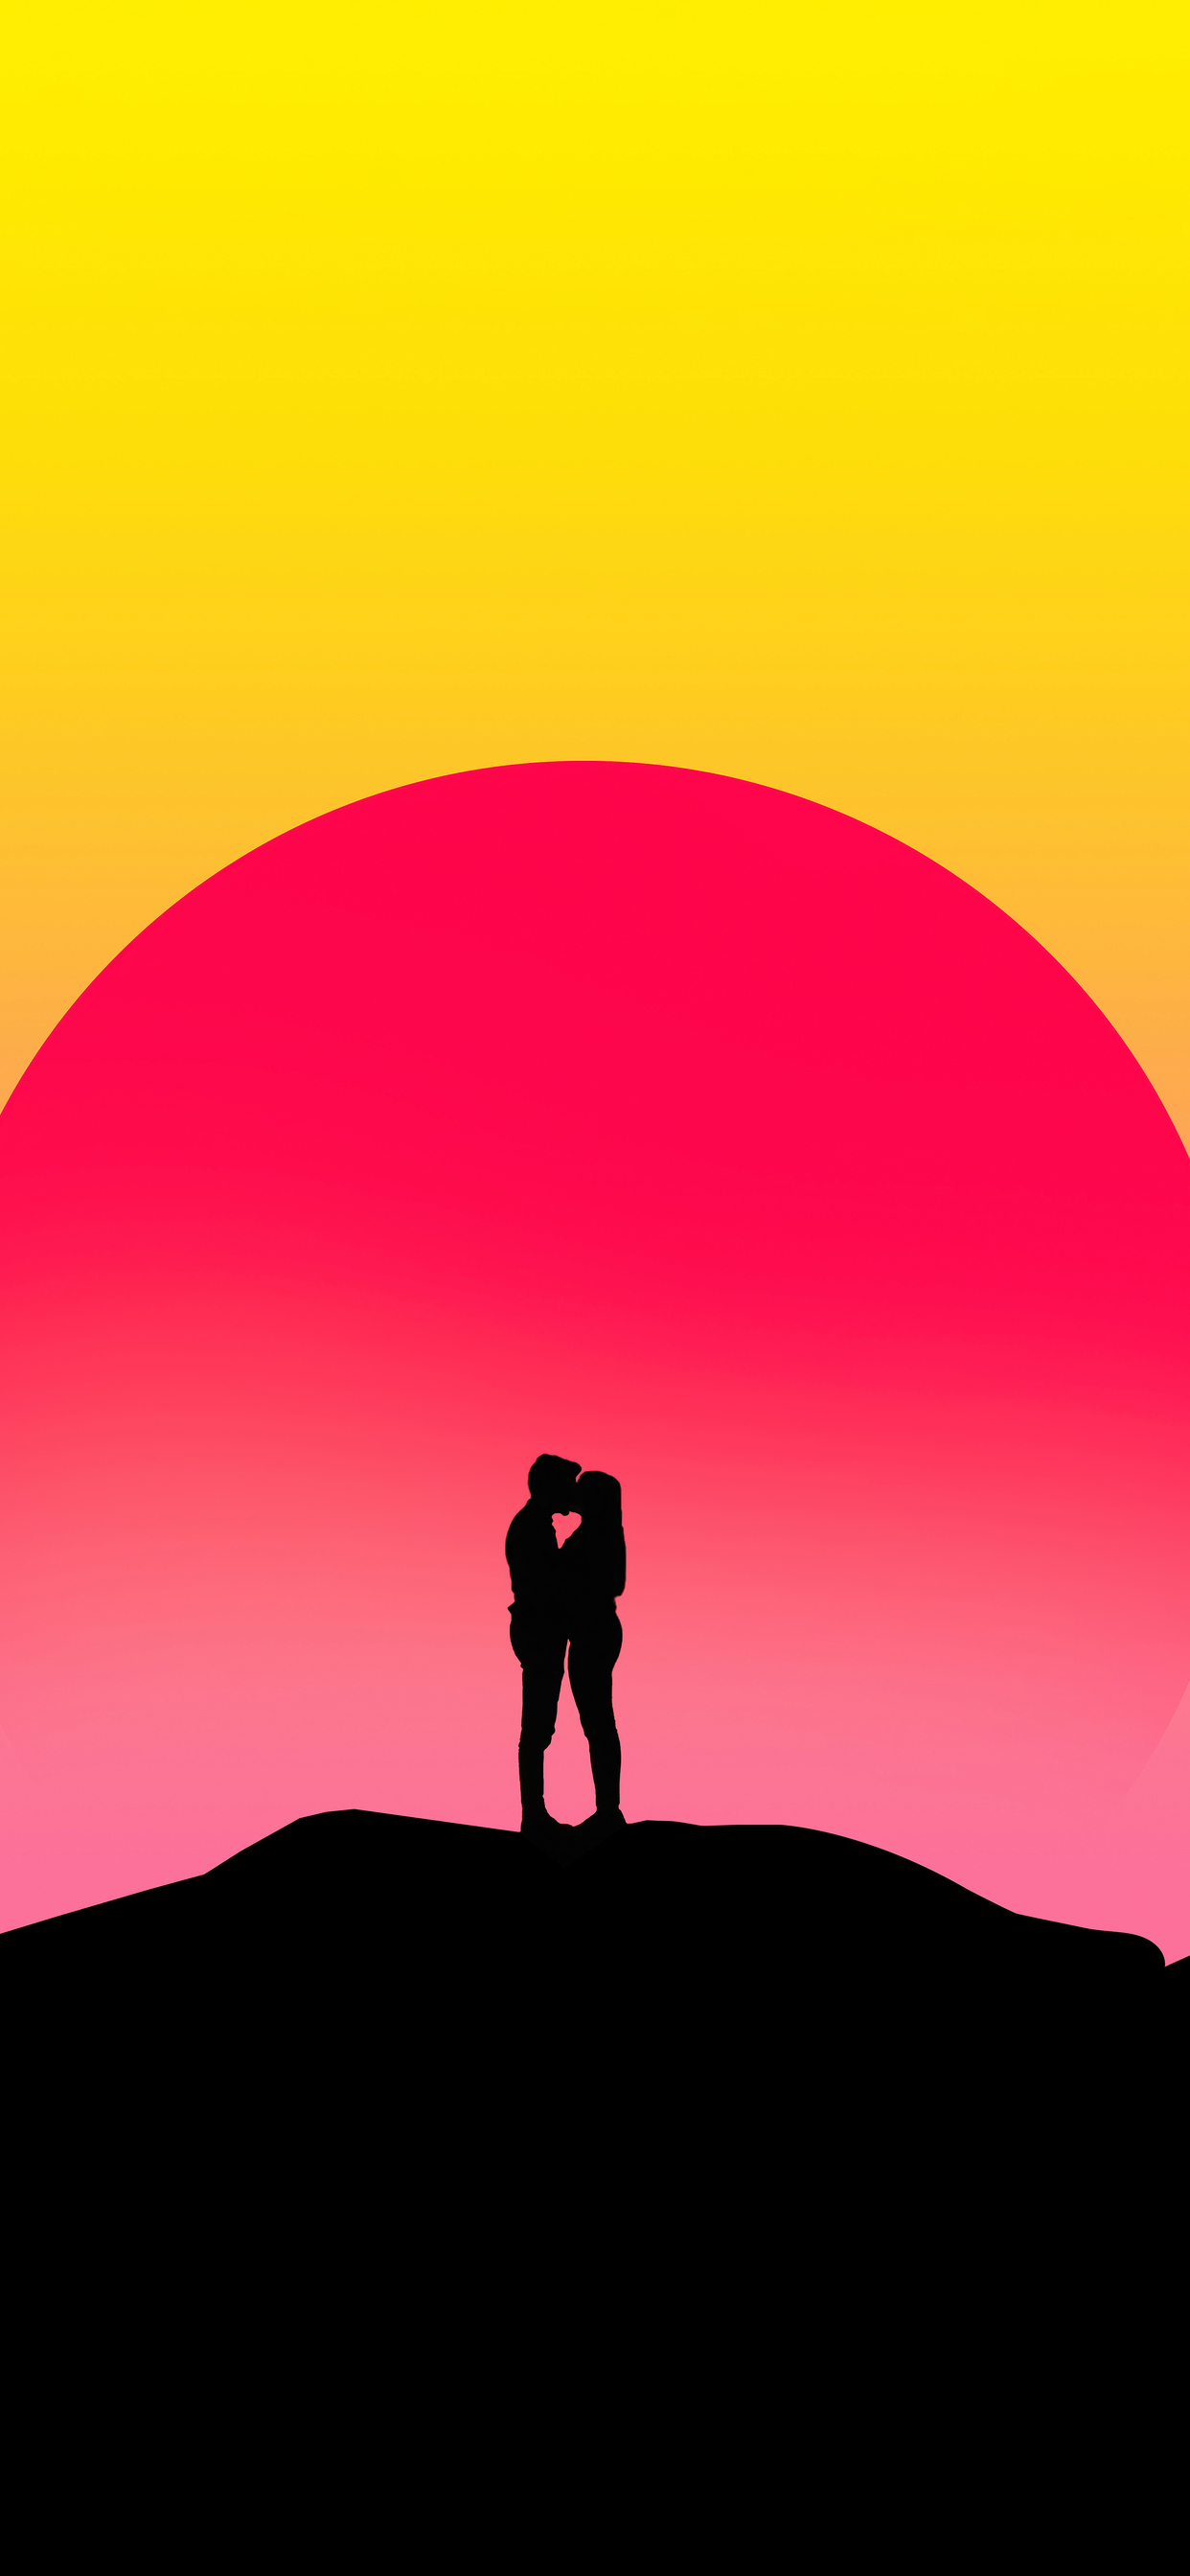 couple-kissing-silhouette-digital-art-4k-cy.jpg